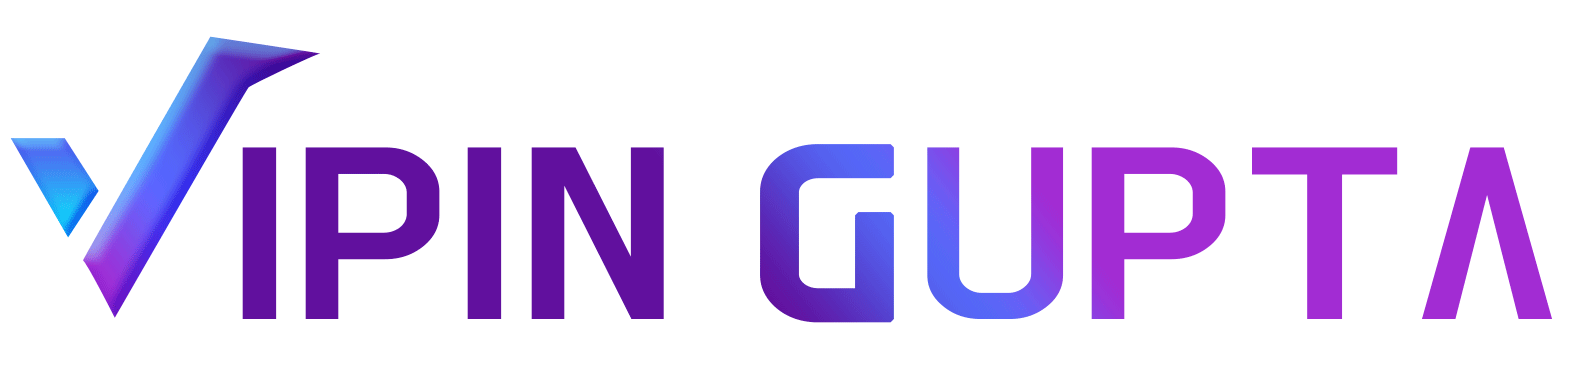 Vipin Gupta Logo Blue